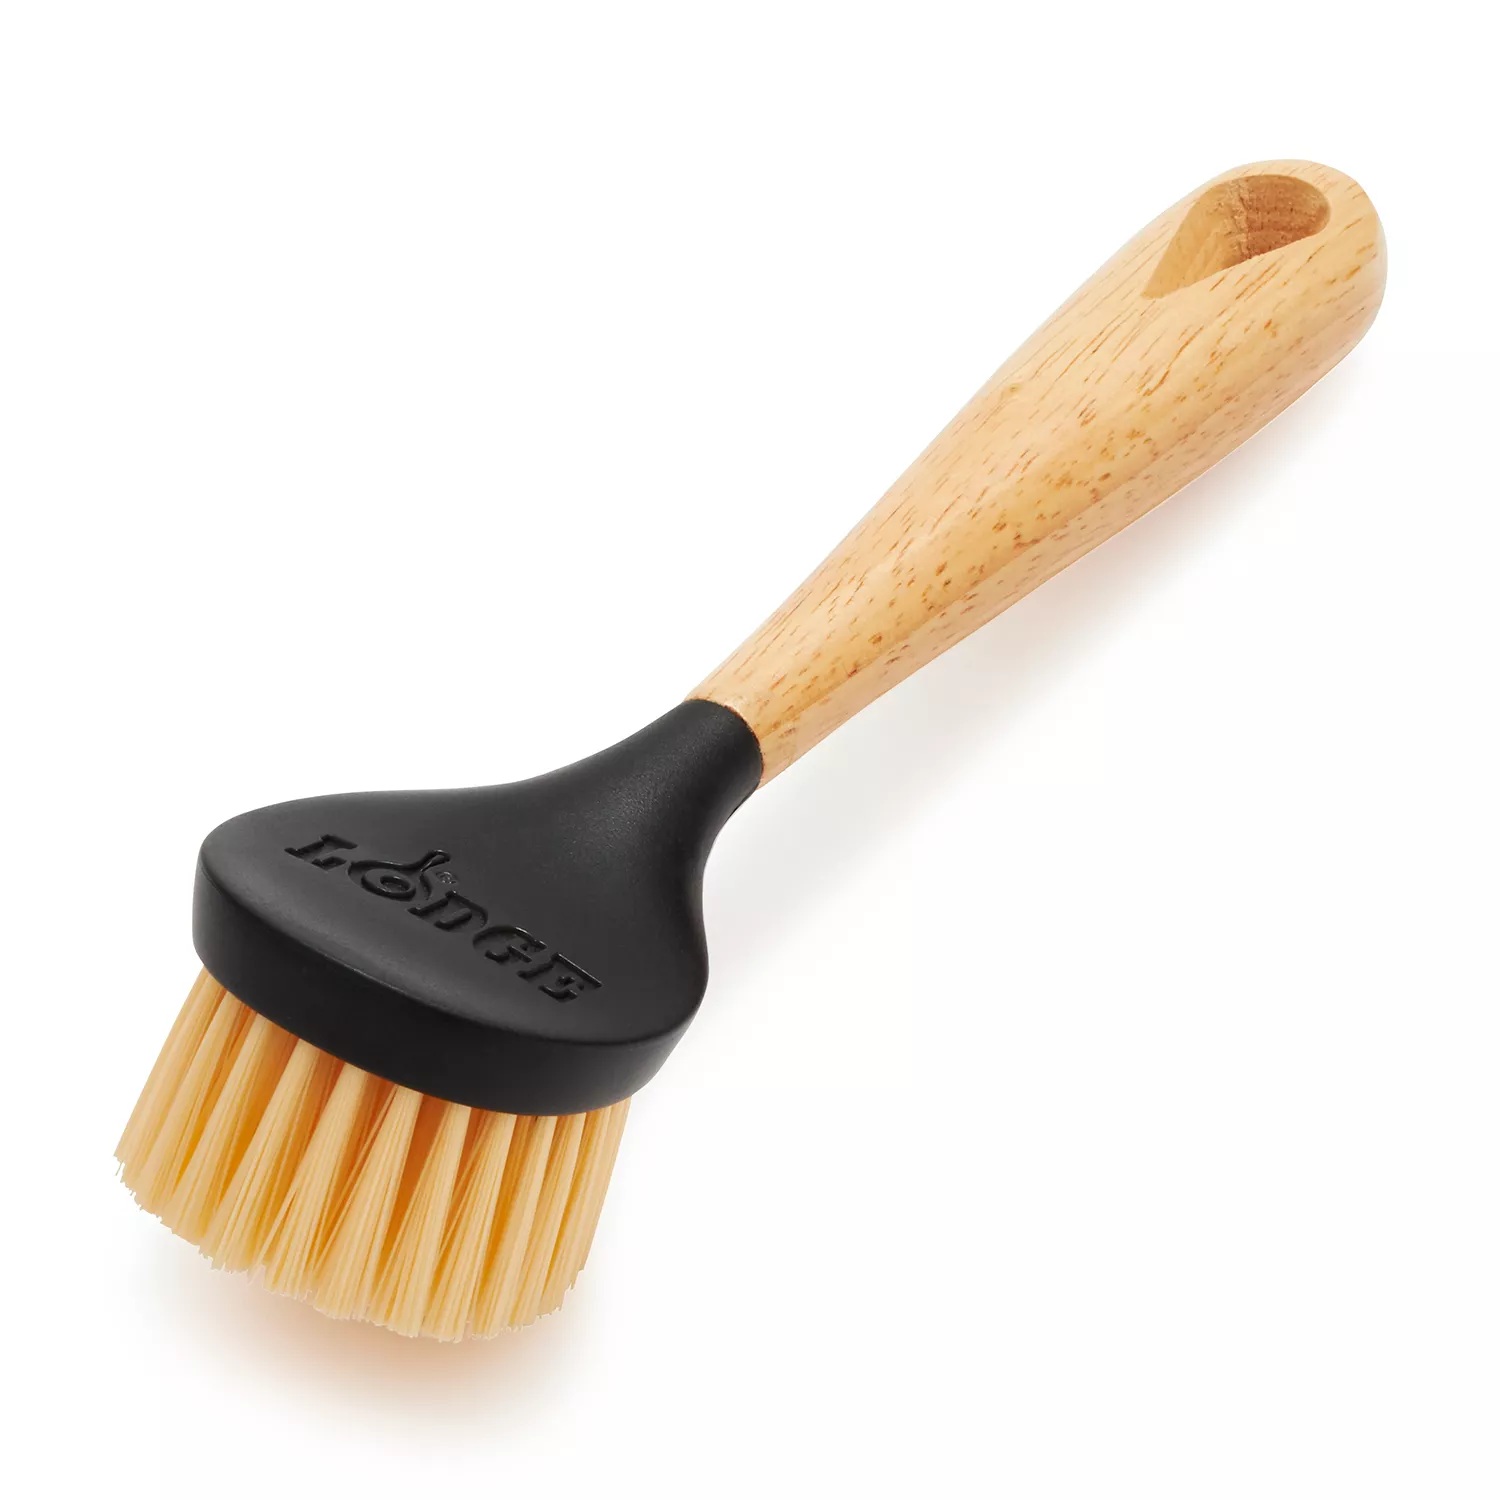 Lodge Cast Iron Scrub Brush, 10